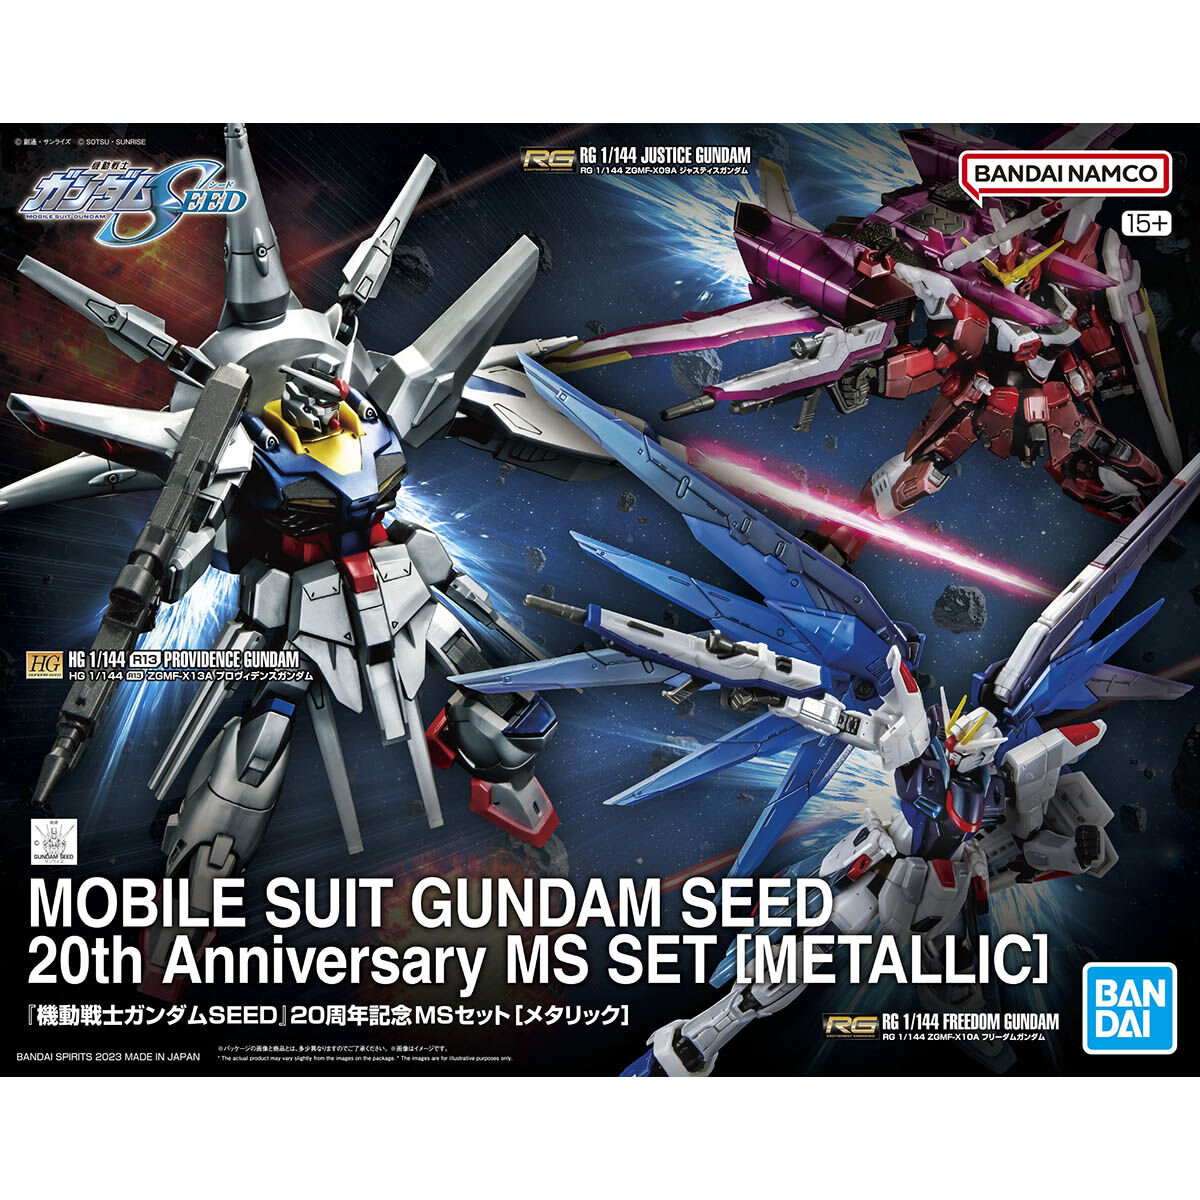 RG 1/144 ZGMF-X10A Freedom Gundam + RG 1/144 ZGMF-X09A Justice Gundam + HGGS 1/144 Renewal.013 ZGMF-X13A Providence Gundam(Clear Color)